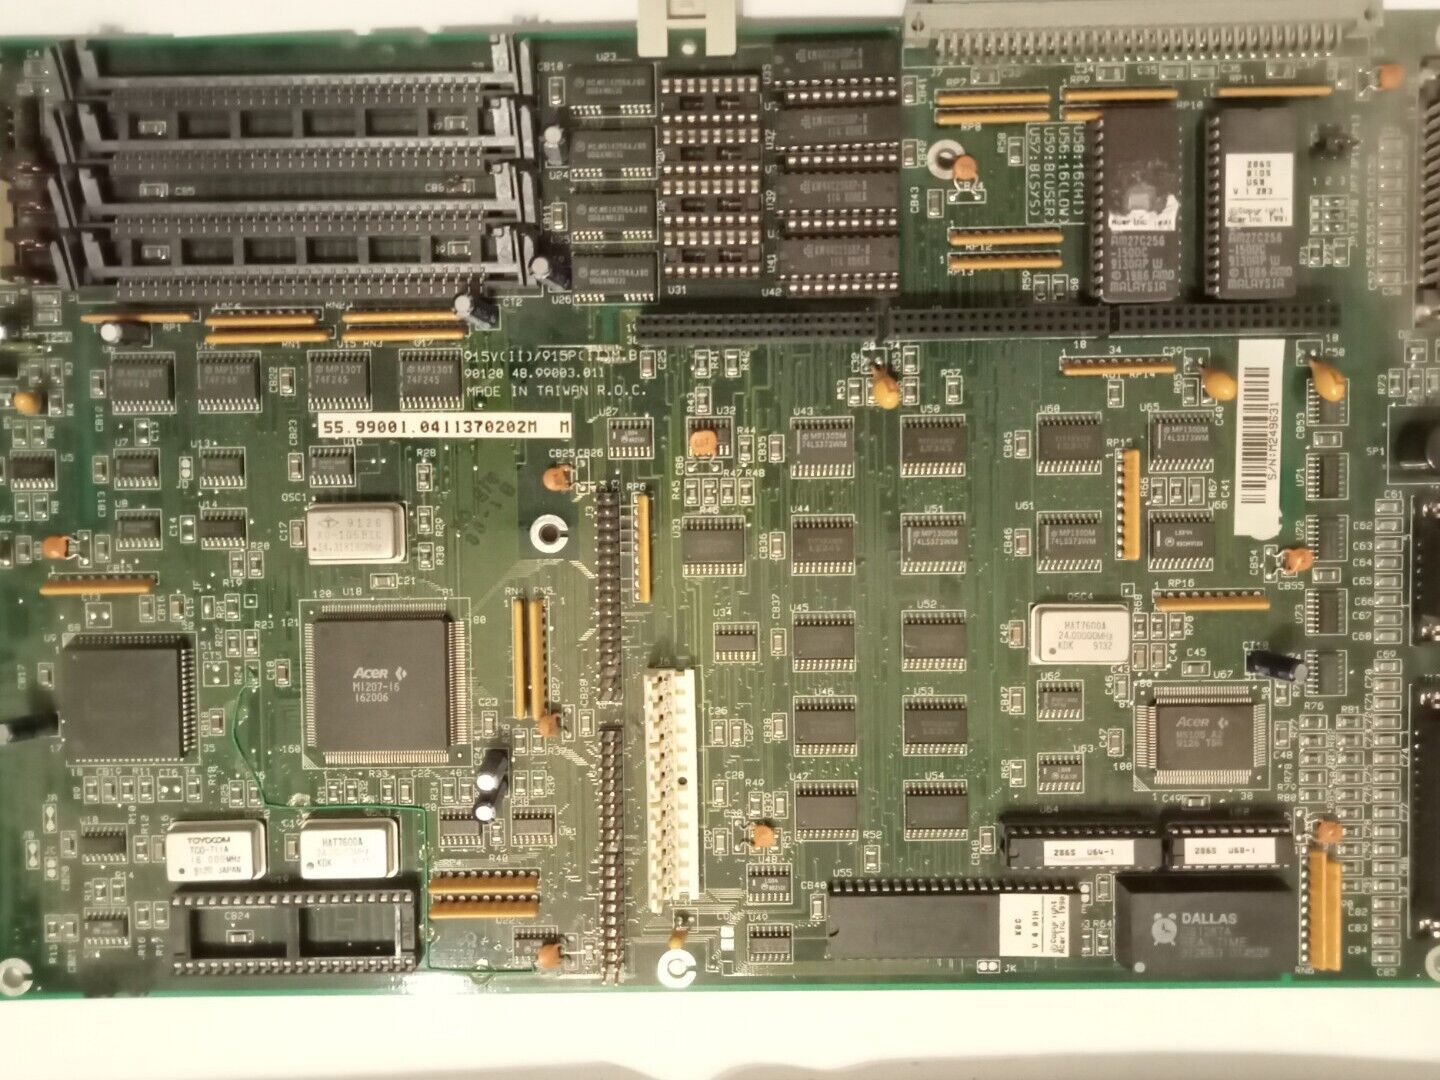 ACER 915 Vintage Intel 286 Motherboard. First Acer PC Motherboard. Rare